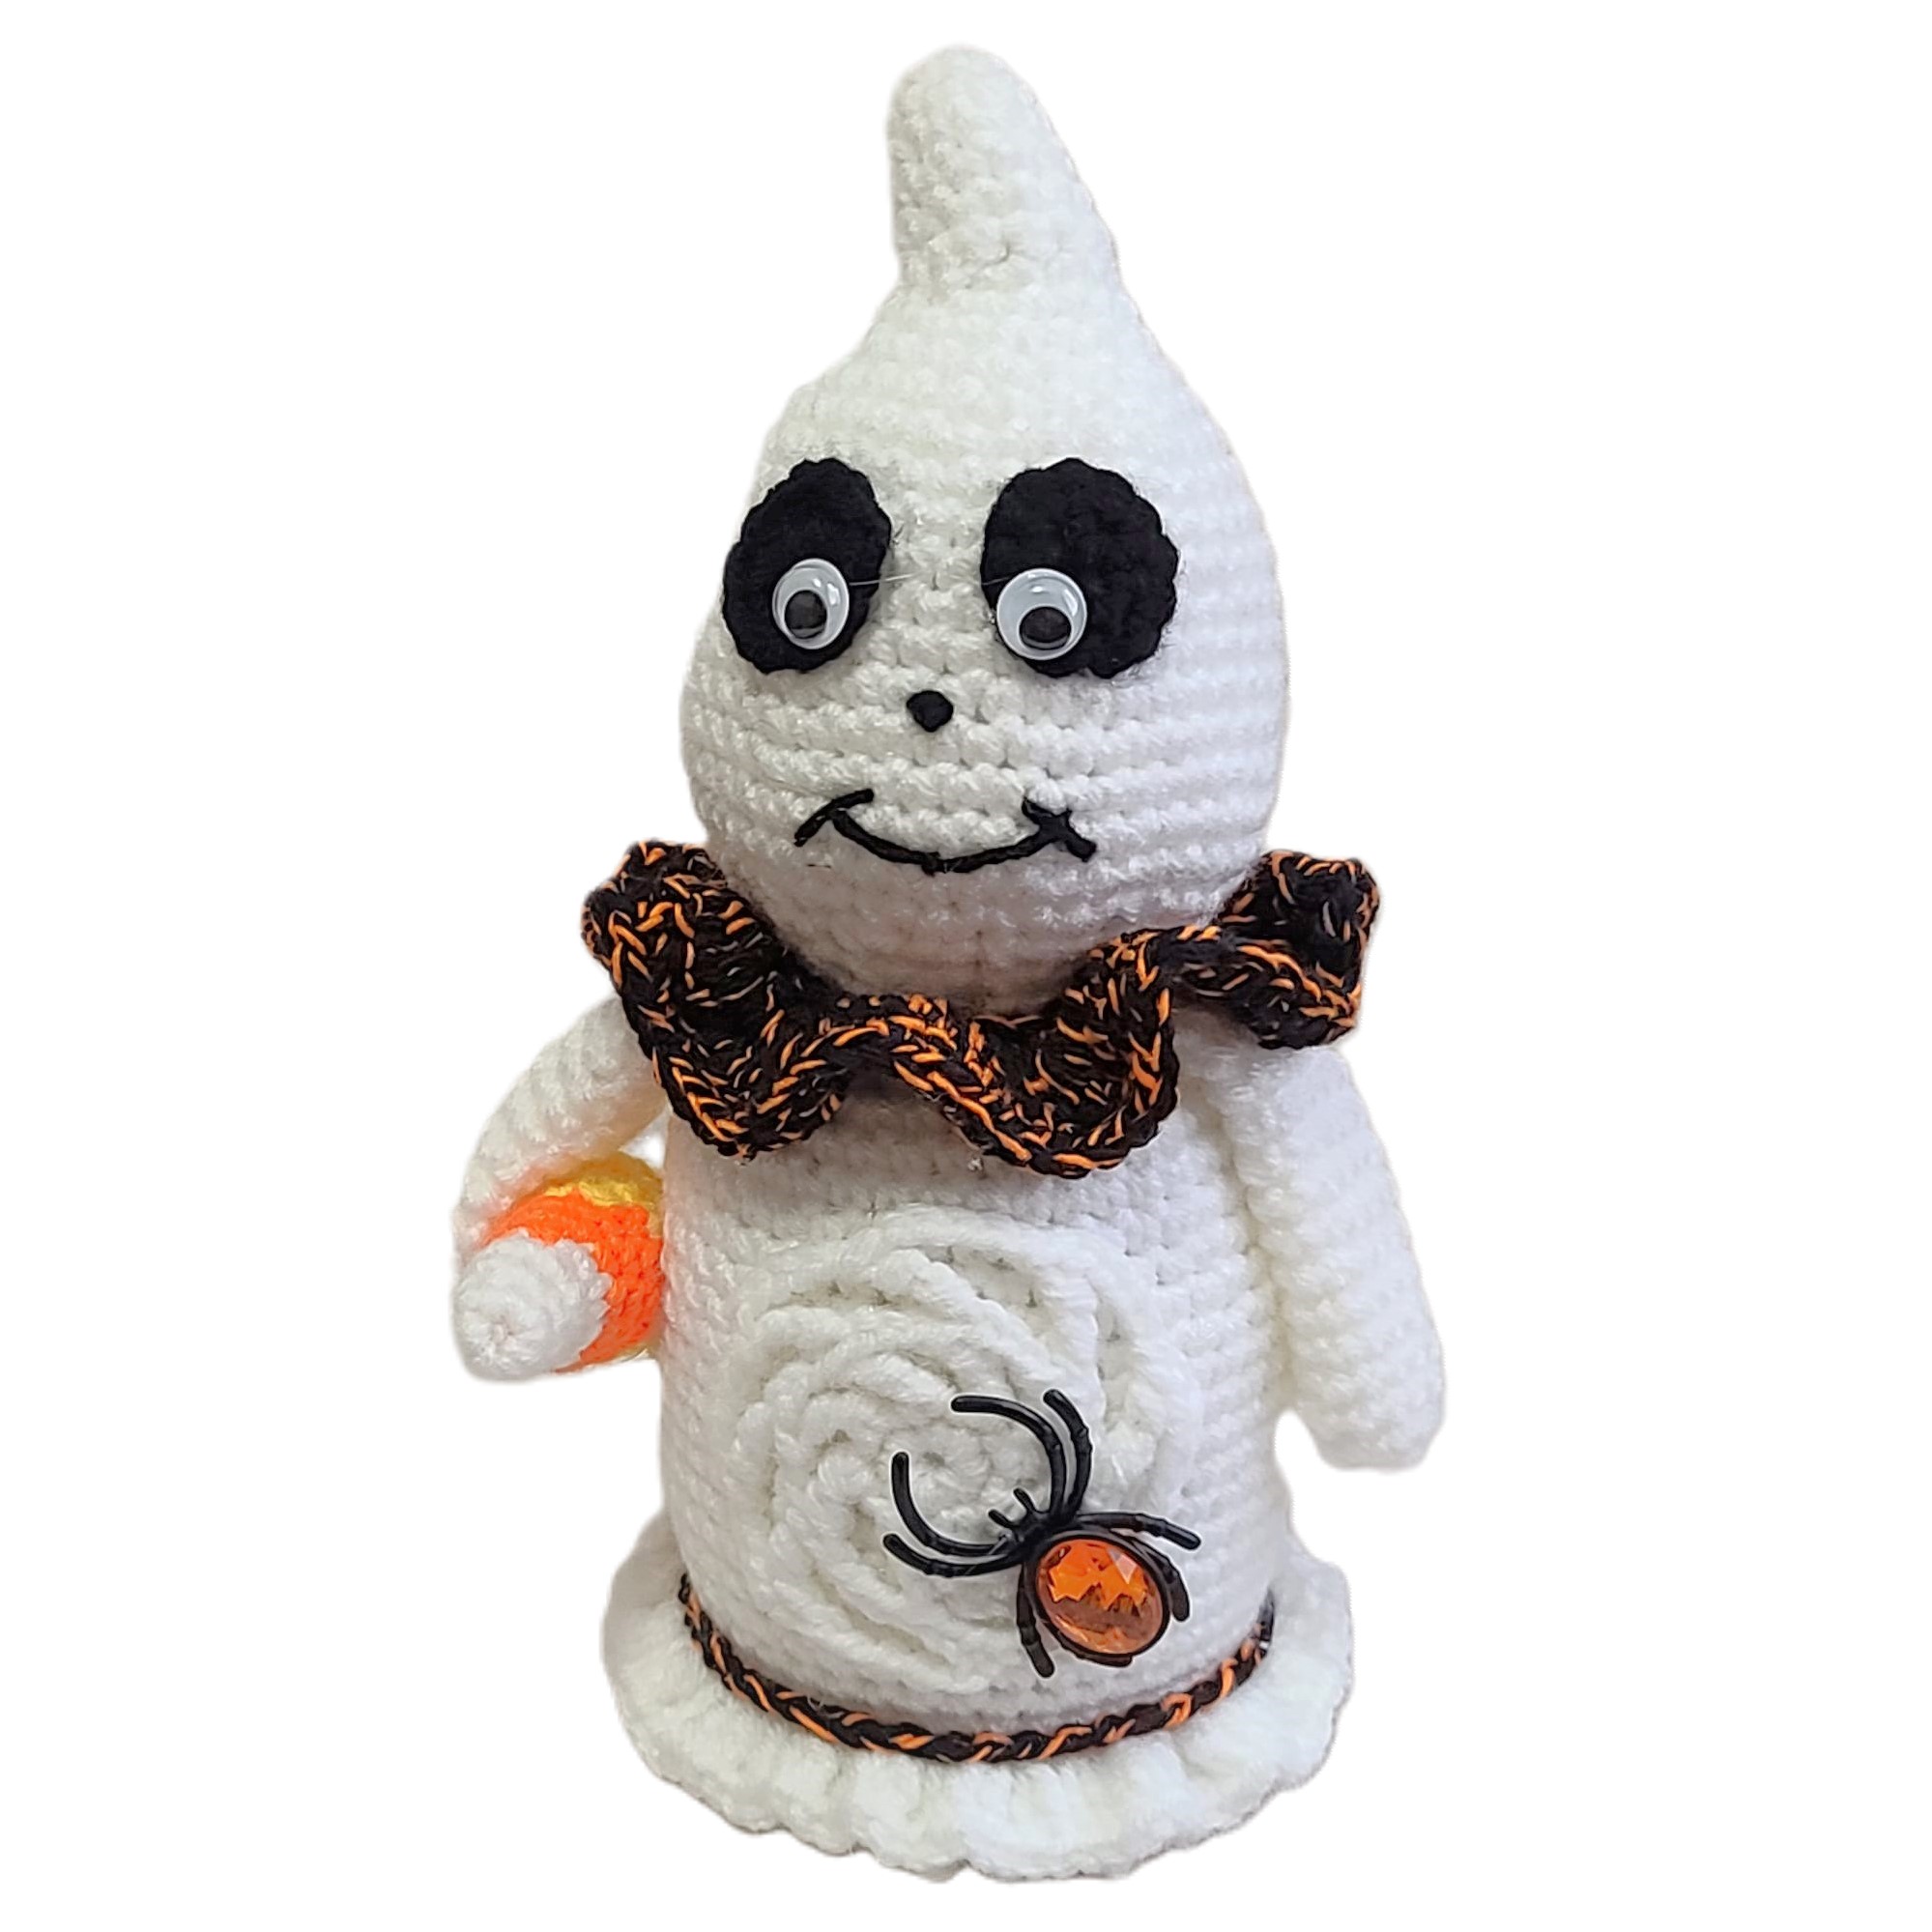 Crochet amigurumi handmade ghost - Click Image to Close